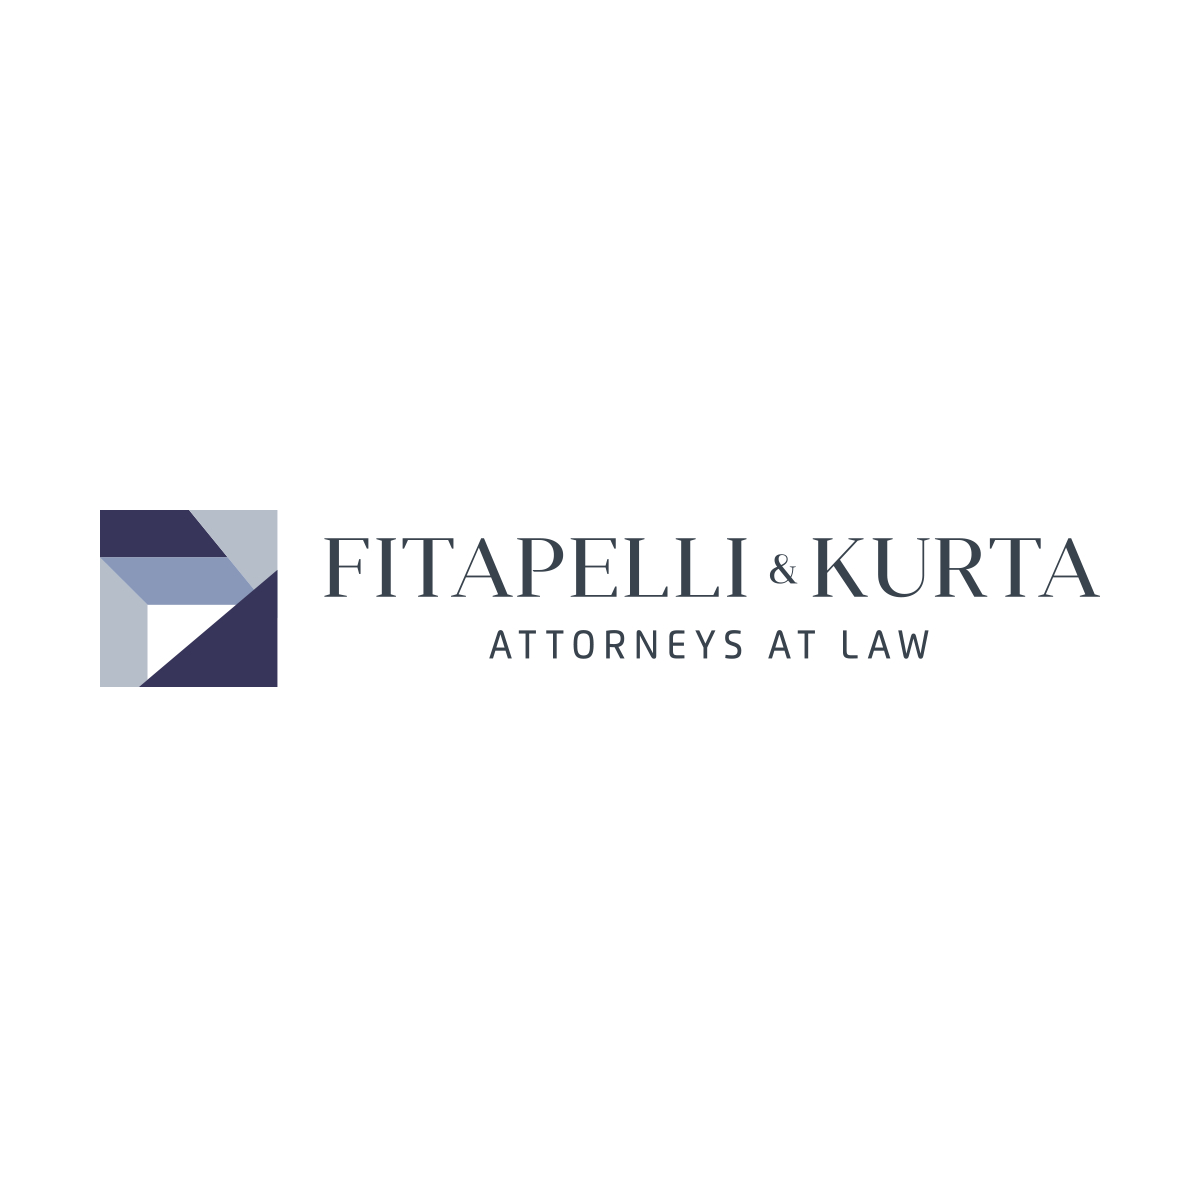 Finra Membership Agreement Lbmz Securities Sanctioned Finra Securities Law Blog June 20